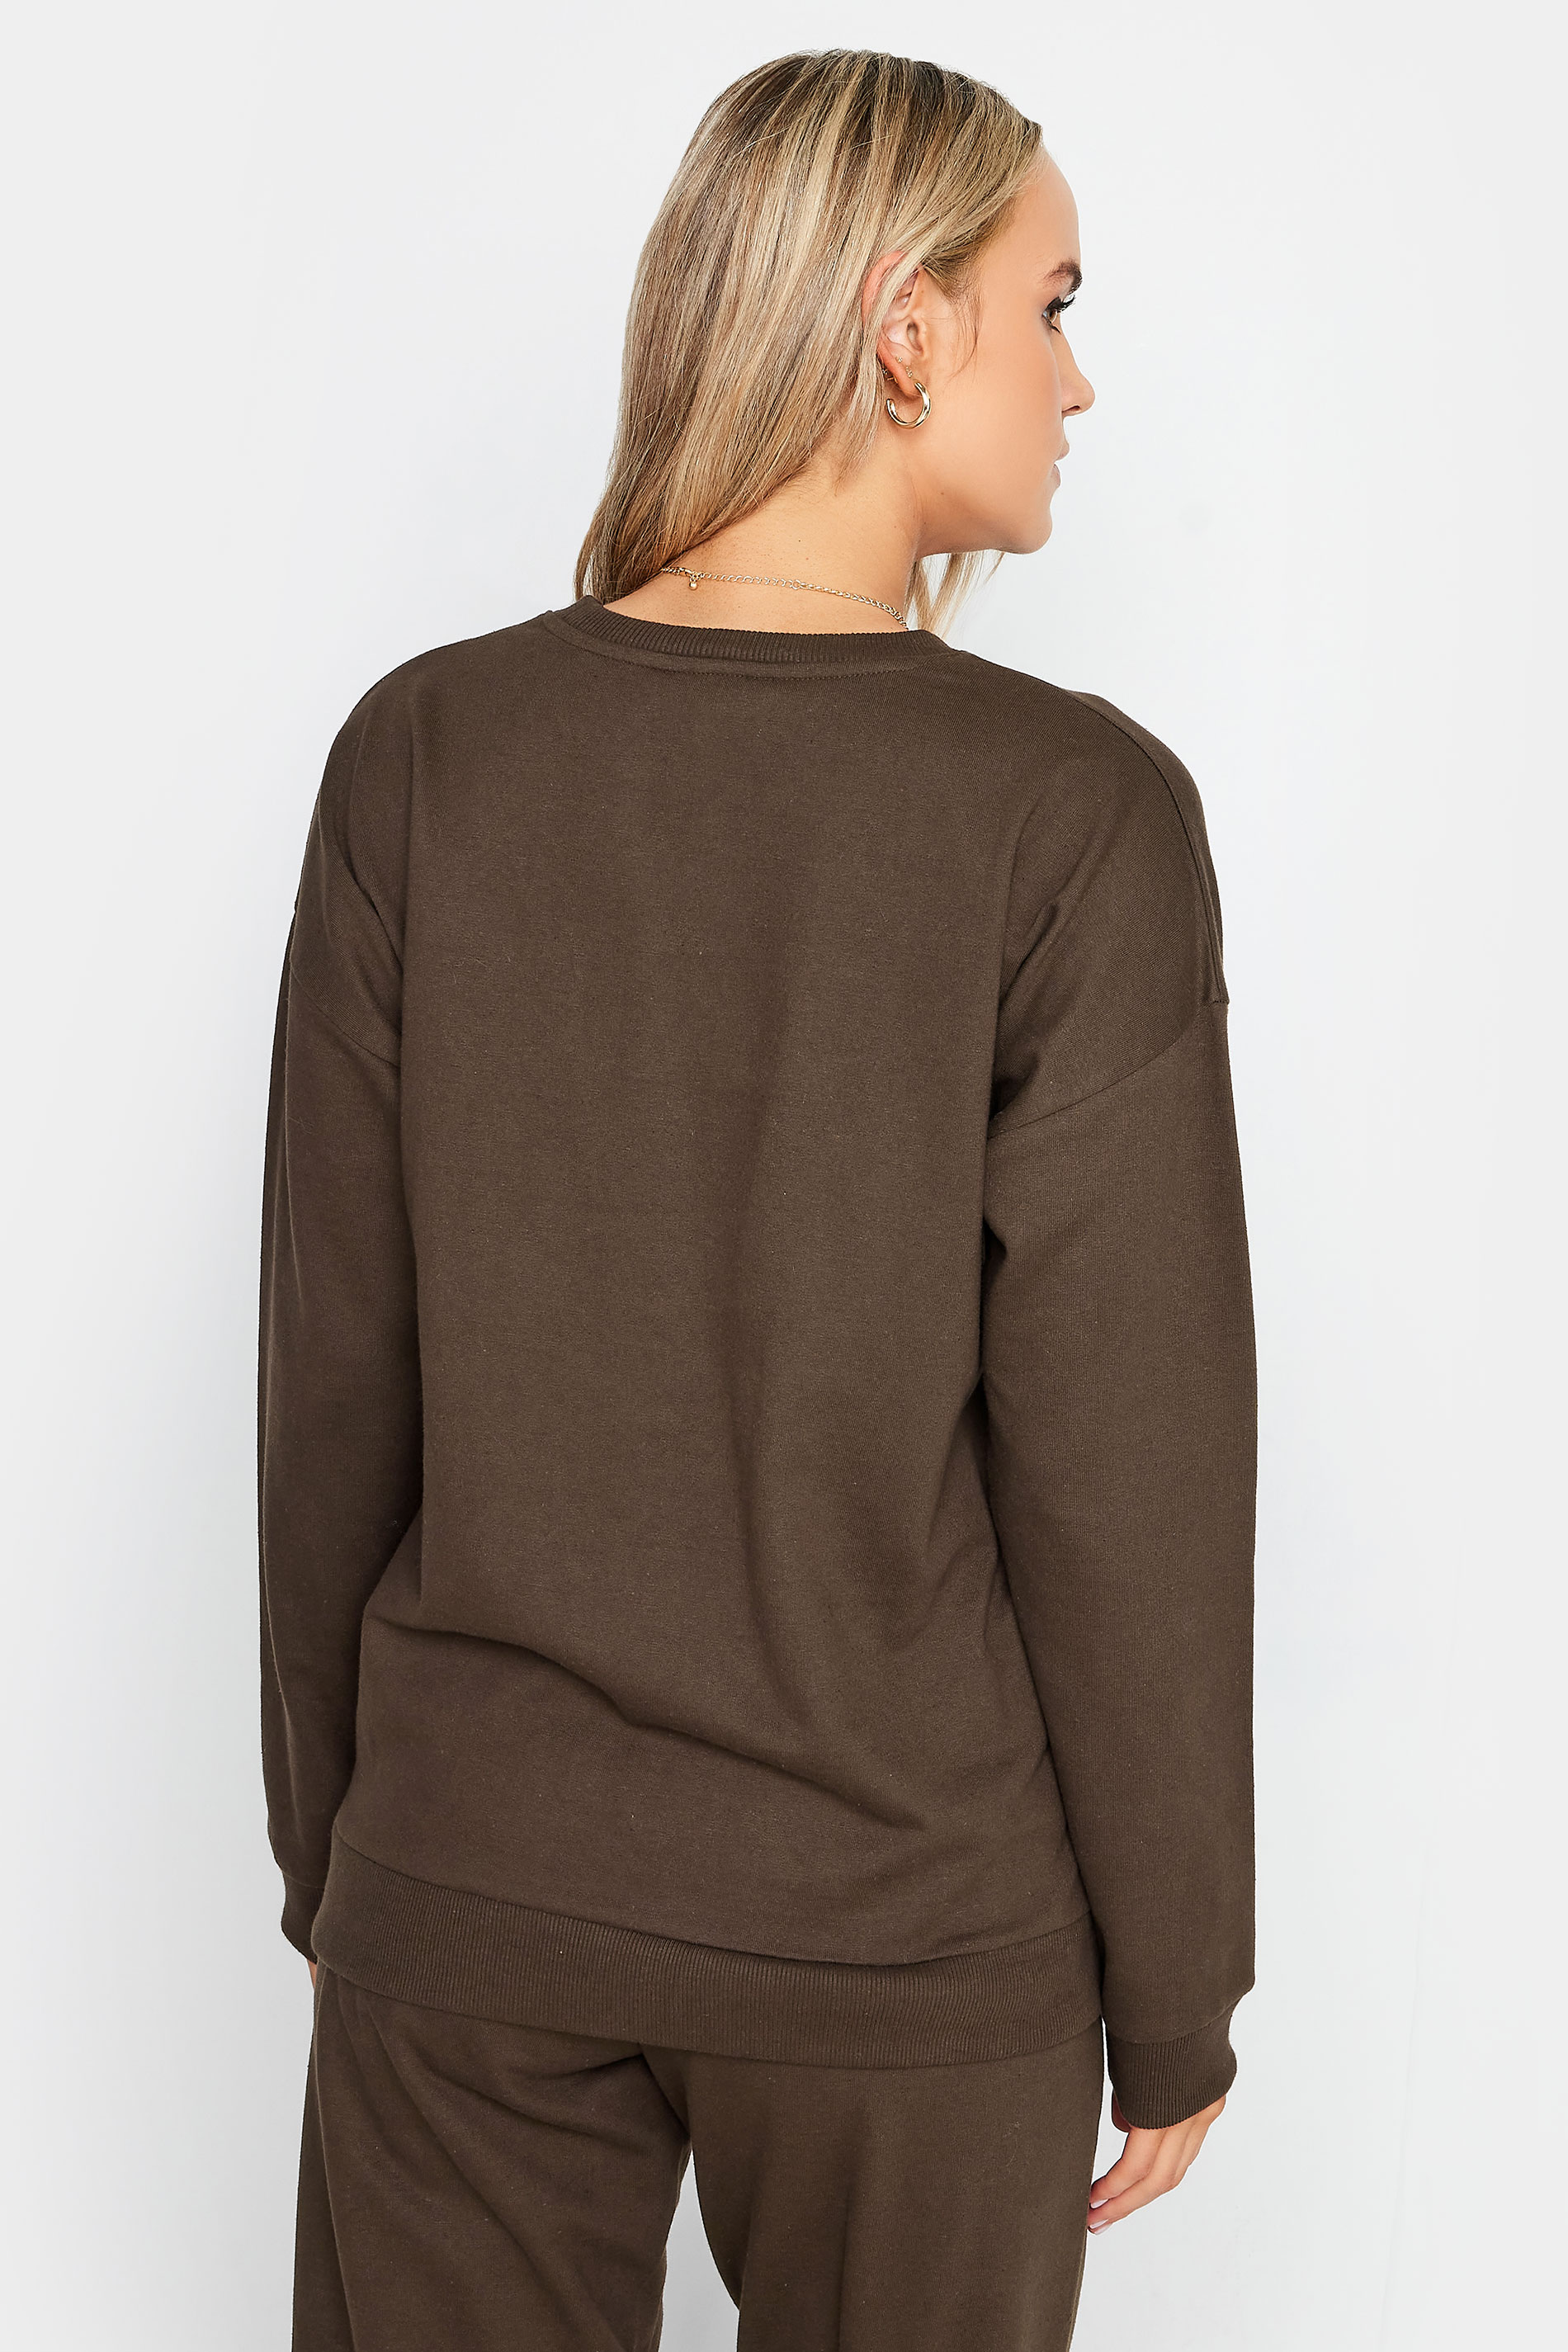 LTS Tall Chocolate Brown Long Sleeve Sweatshirt | Long Tall Sally 3